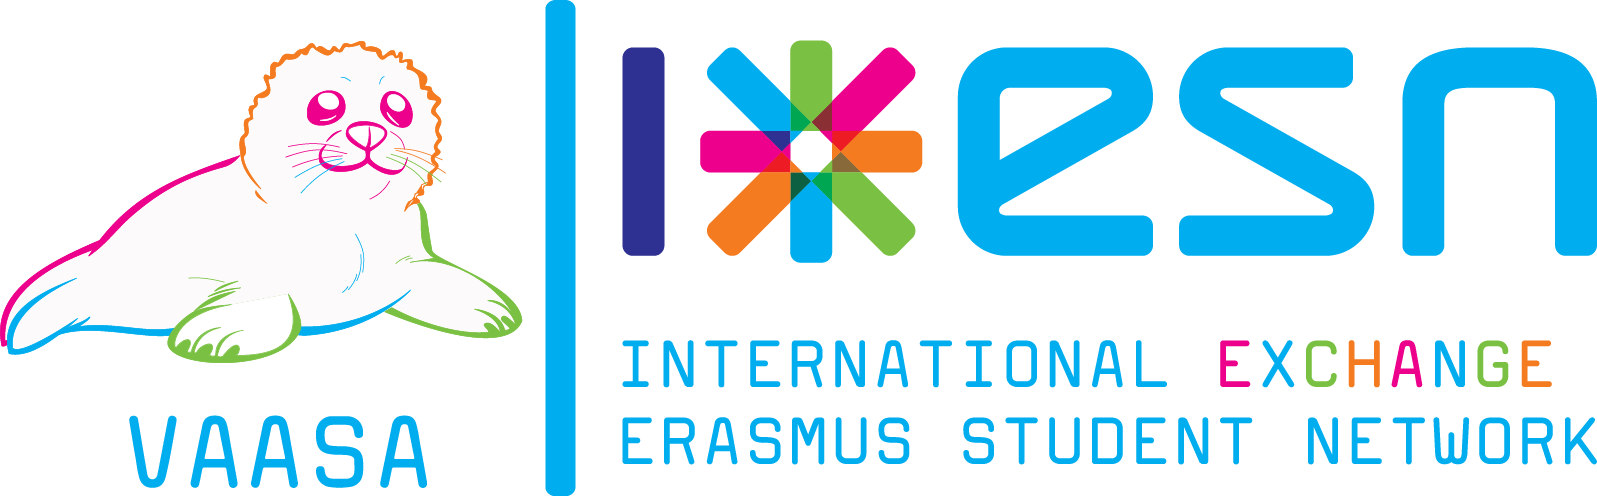 ESN's logo